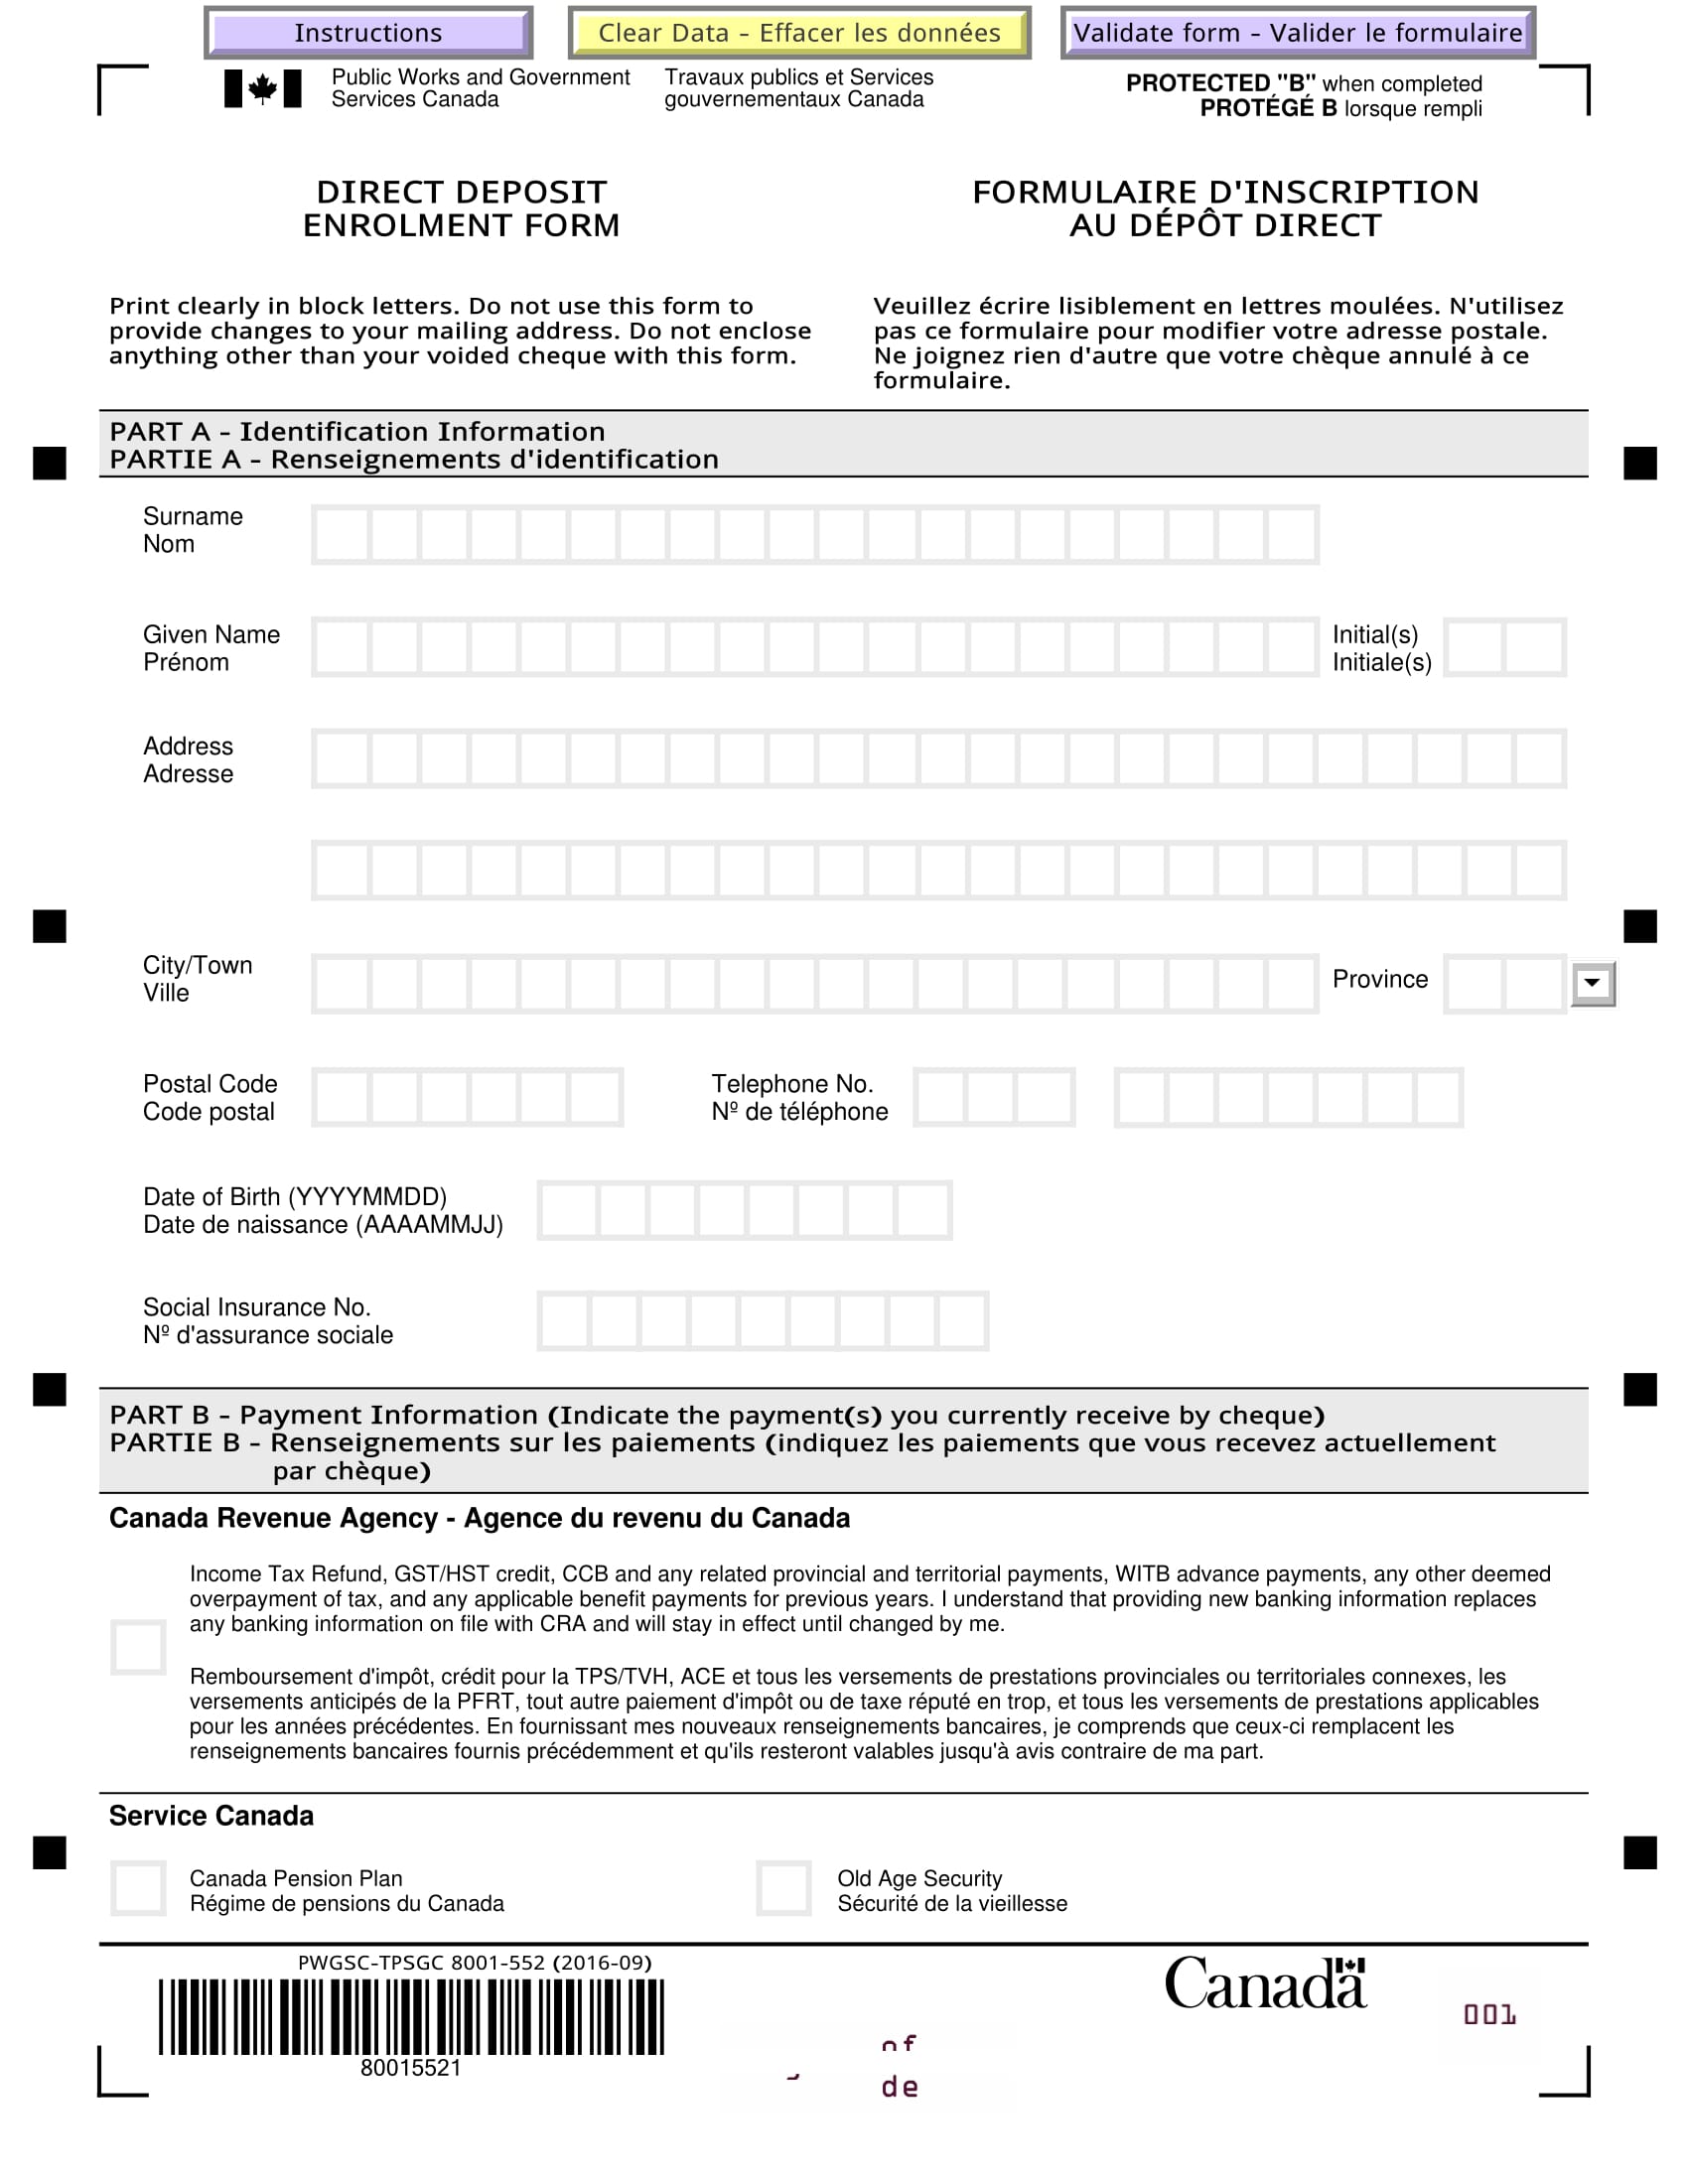 interactive direct deposit enrollment form 1